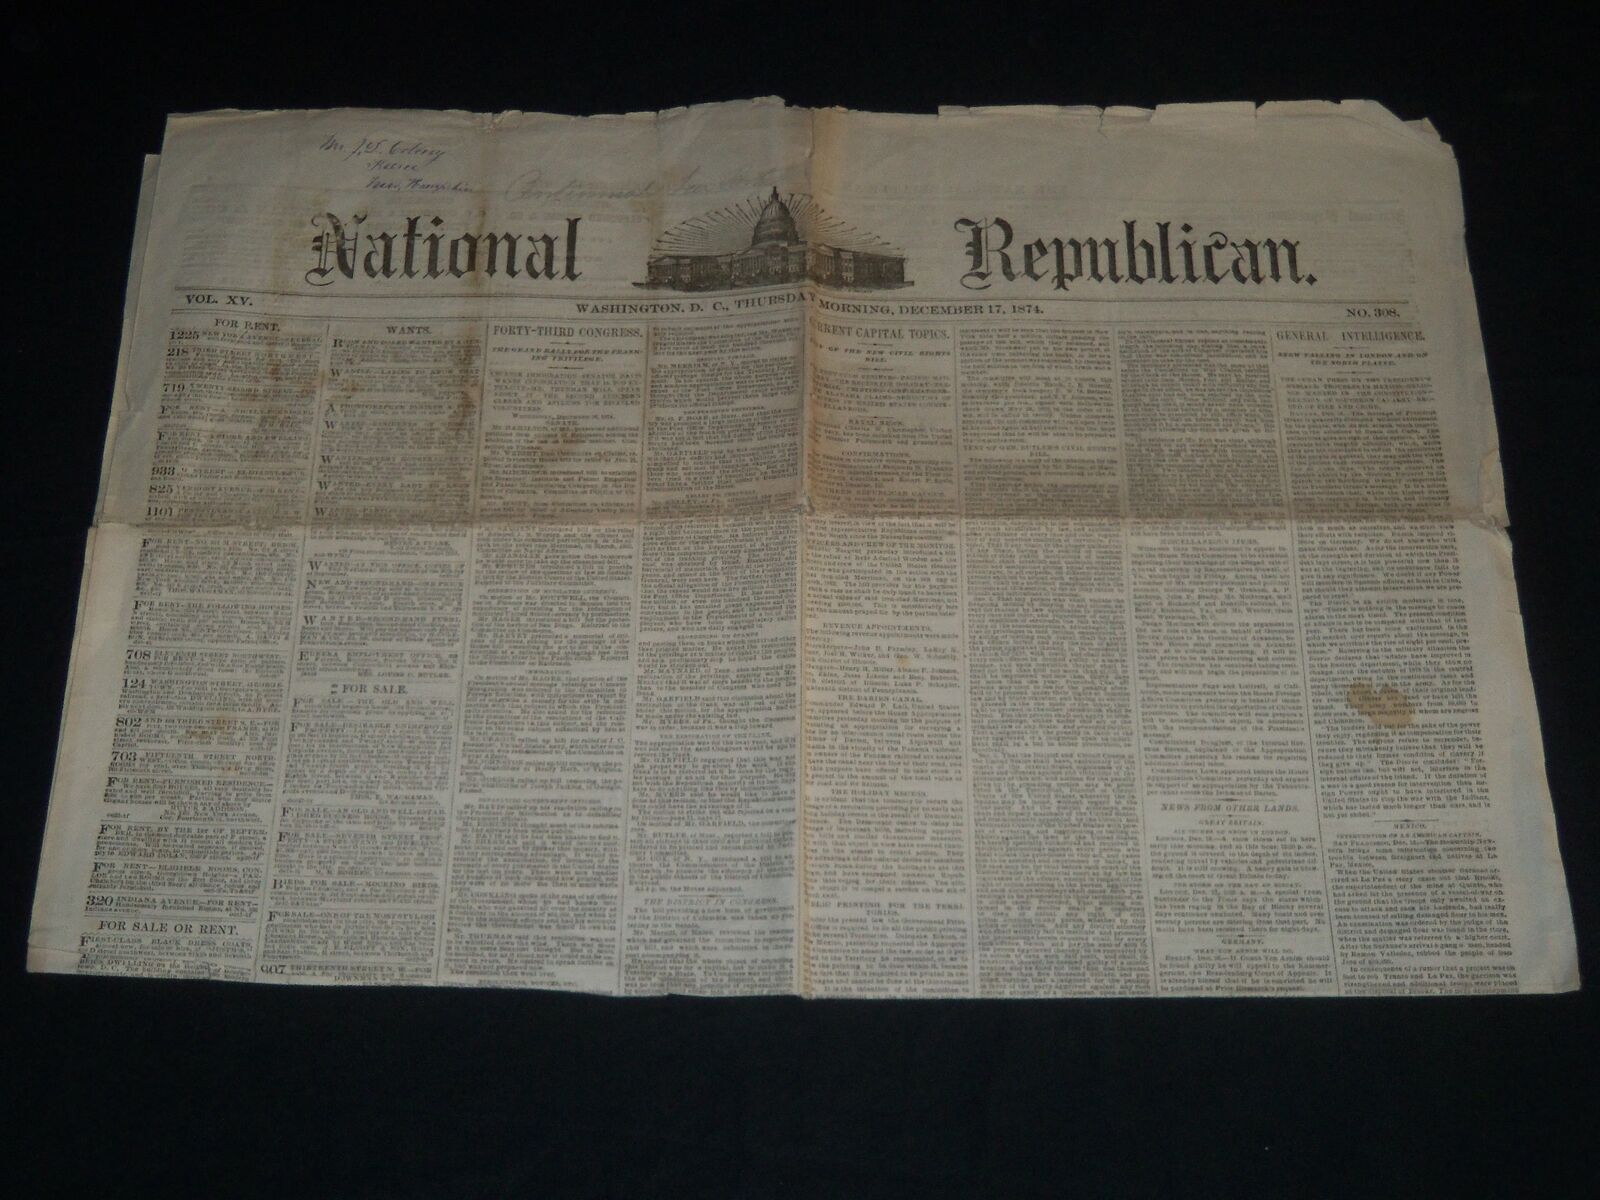 1874 DEC 17 NATIONAL REPUBLICAN NEWSPAPER - WASHINGTON - 43RD CONGRESS - NP 4184